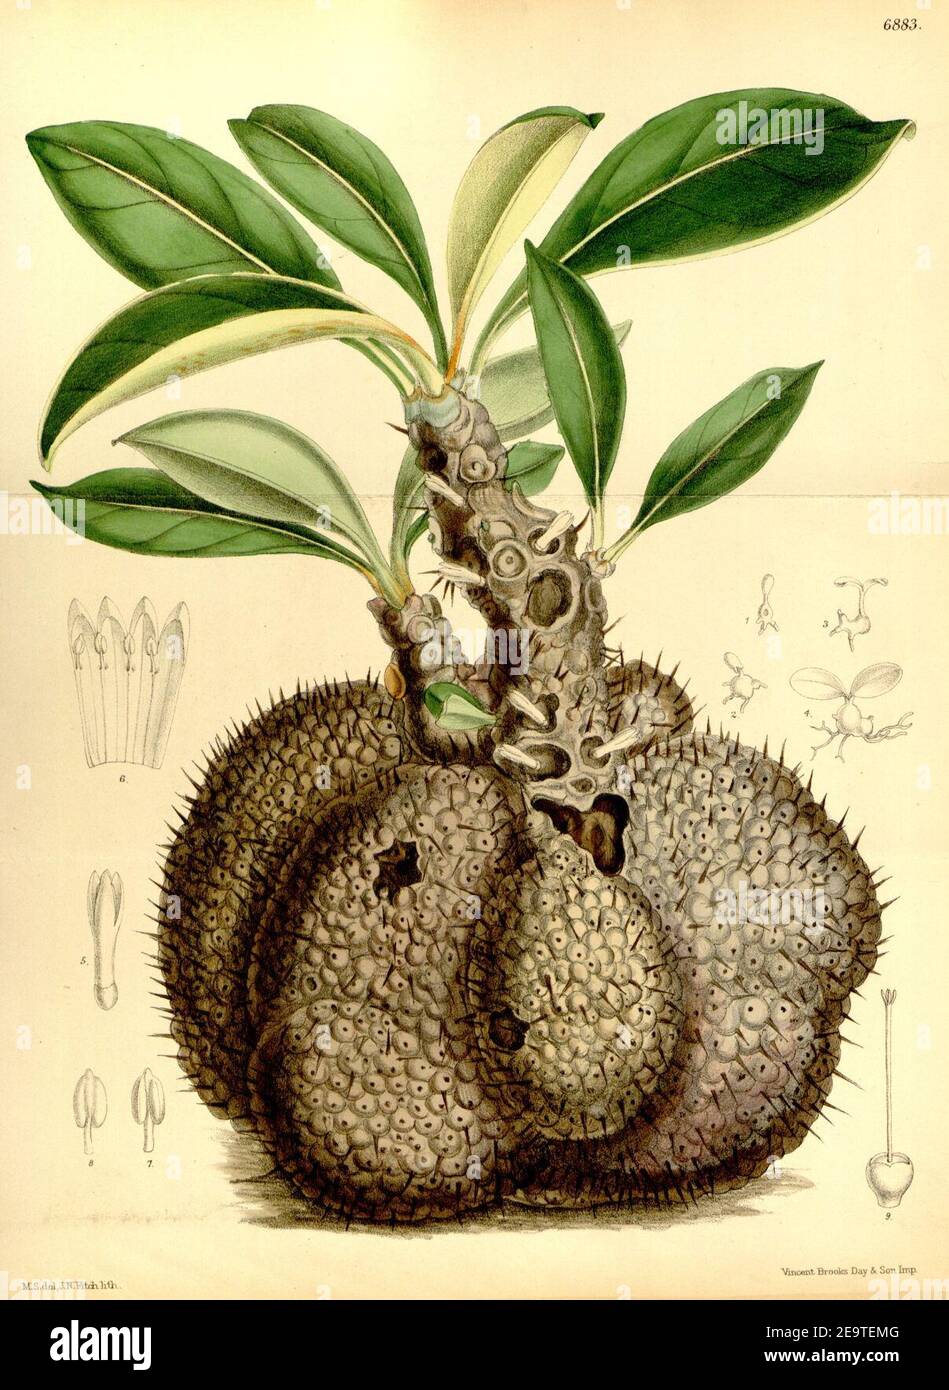 Myrmecodia beccarii Bot. Mag. 112. 6883. 1886. Stock Photo